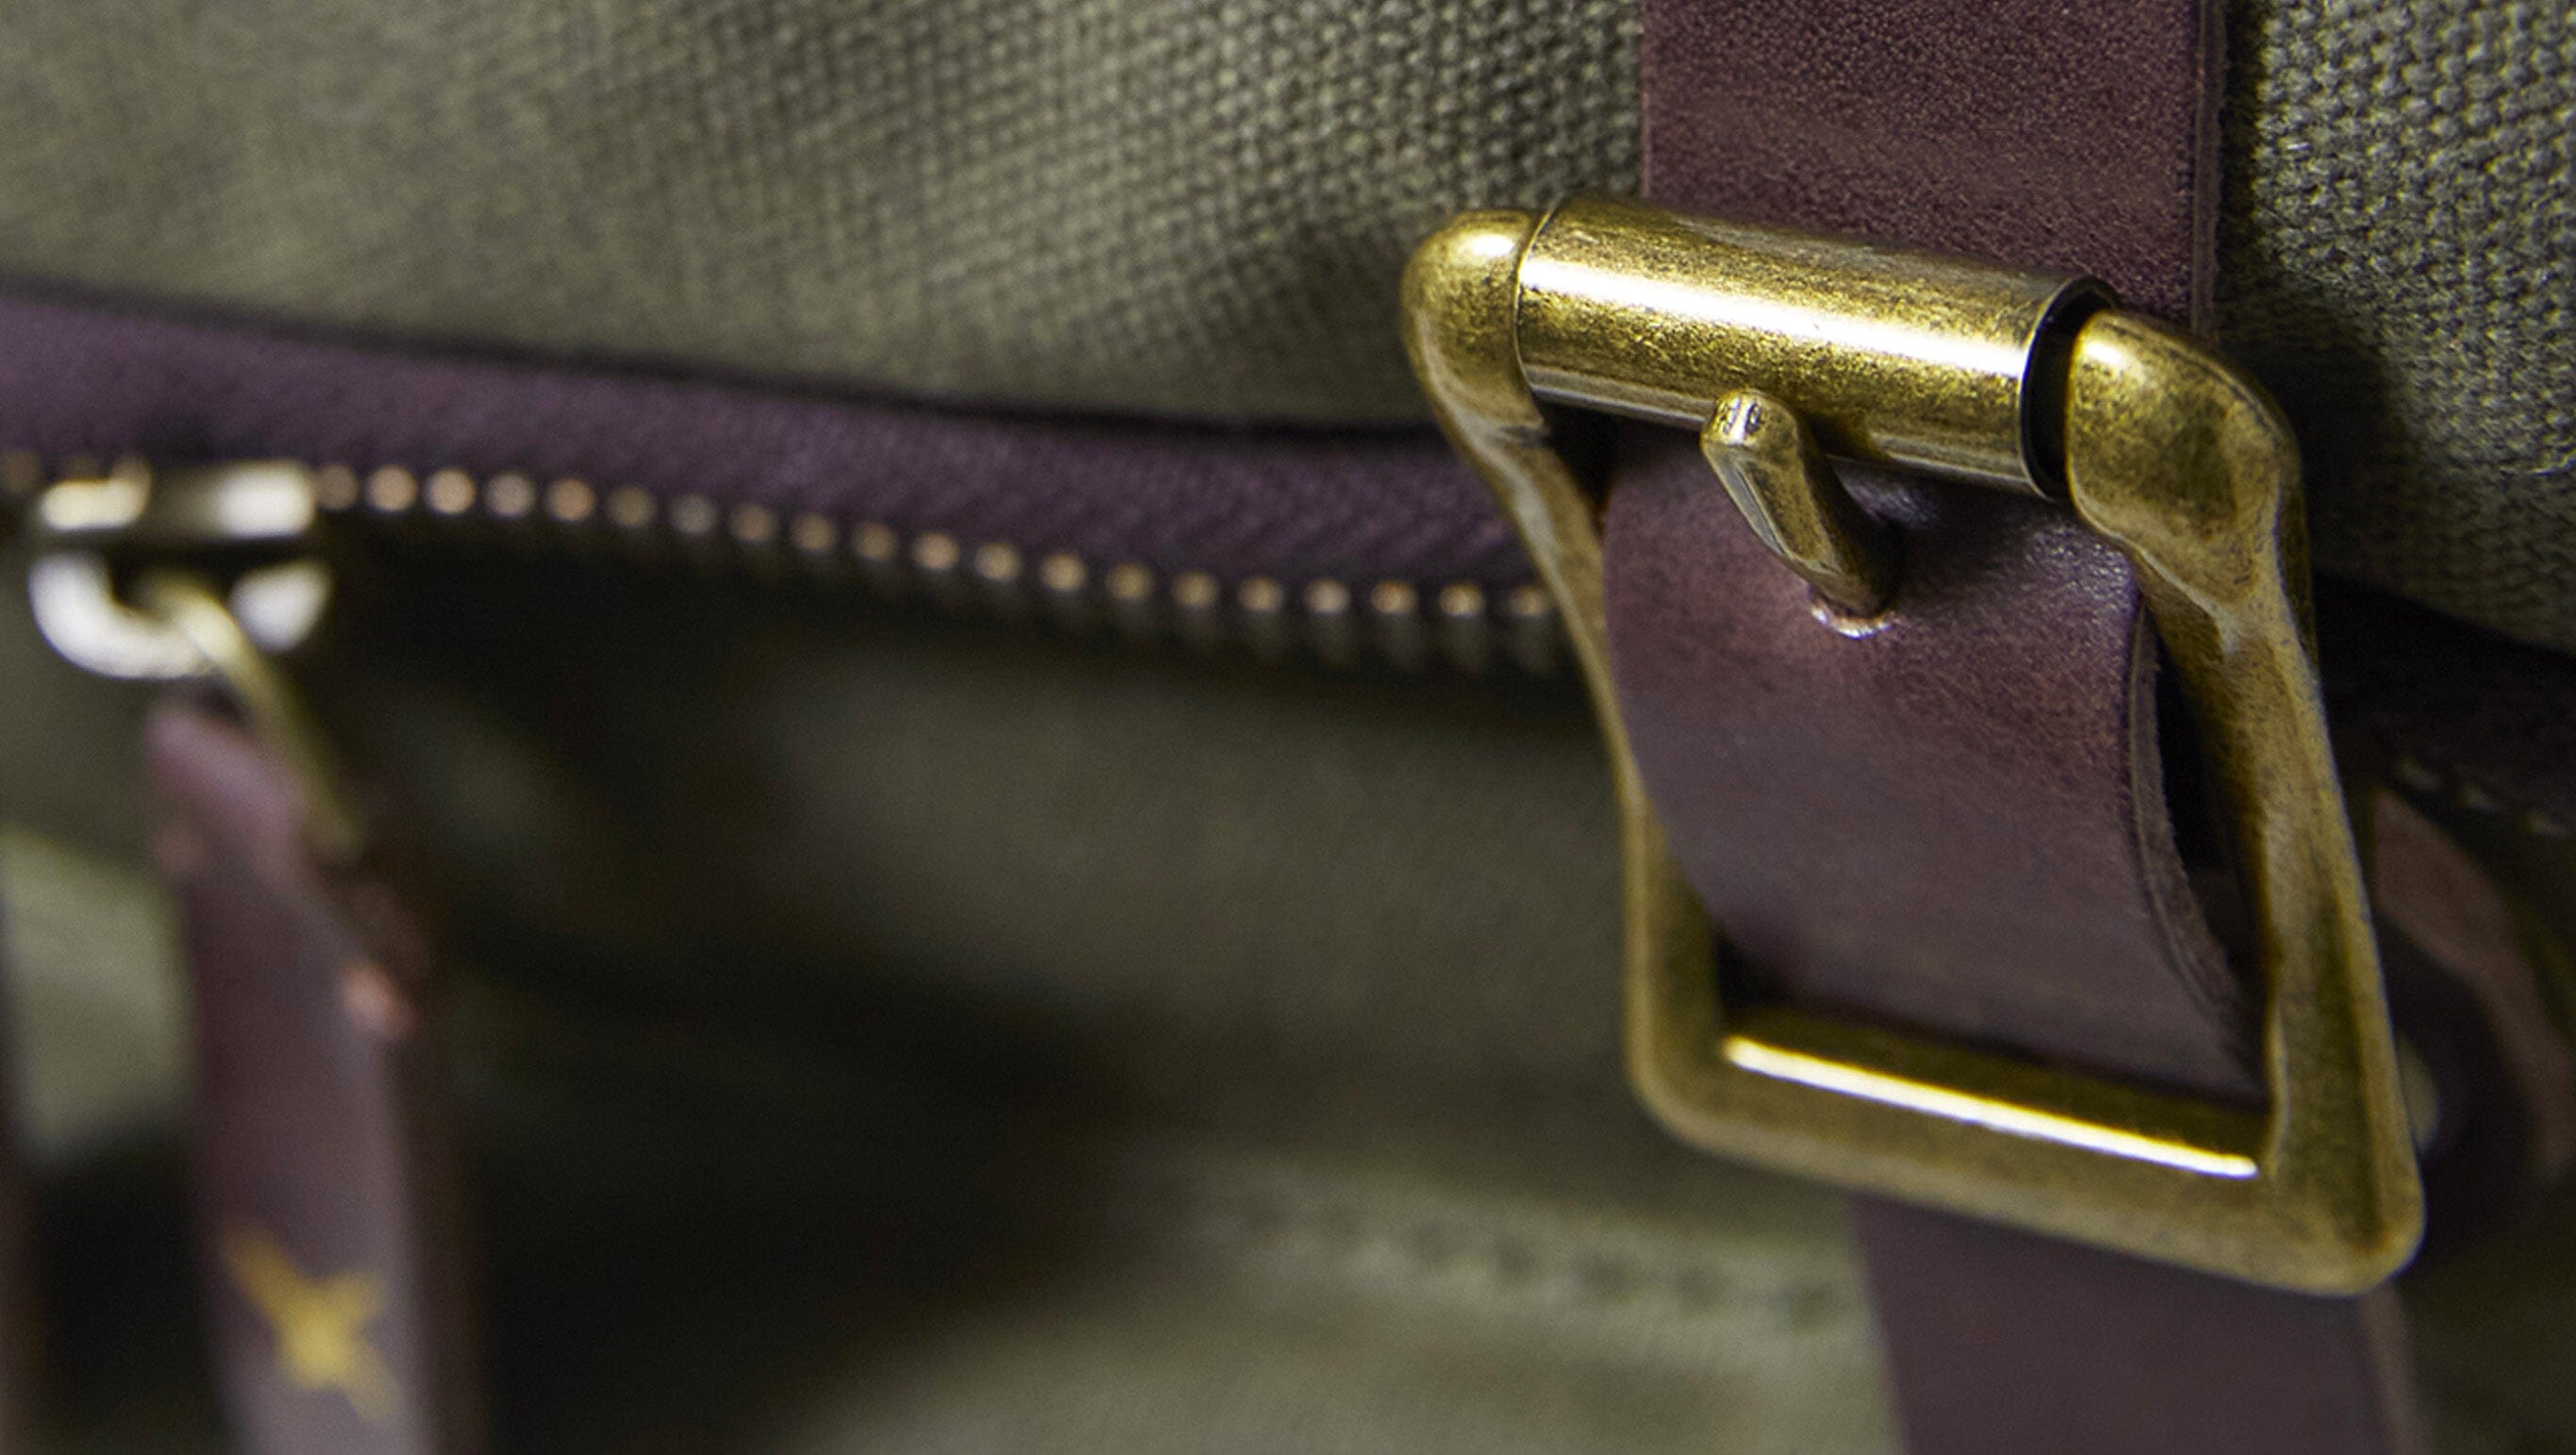 Khaki Slate Waxed Cotton Mini Bali Backpack